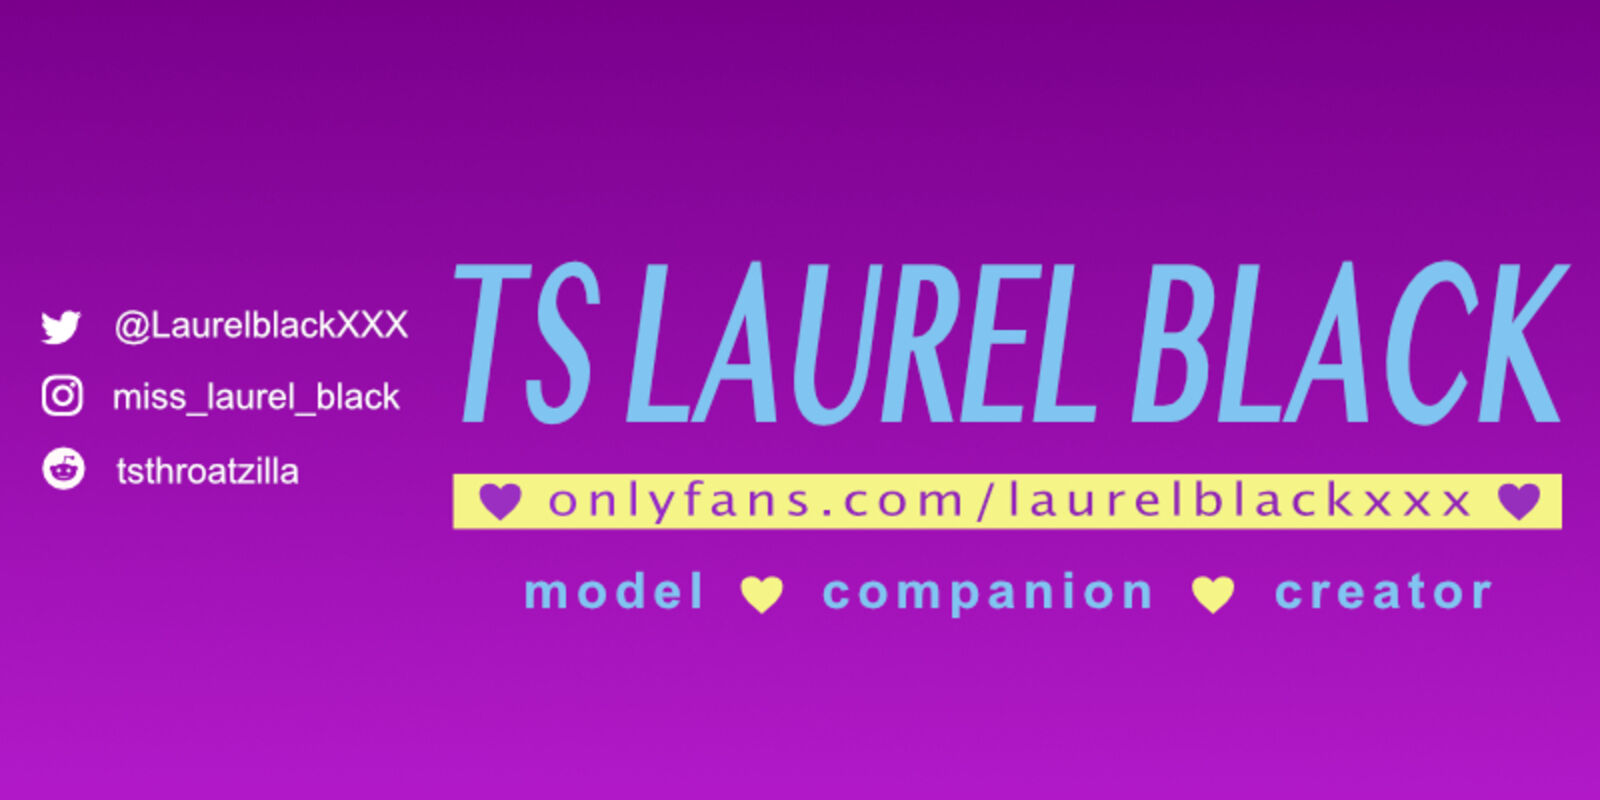 See LaurelblackXXX profile